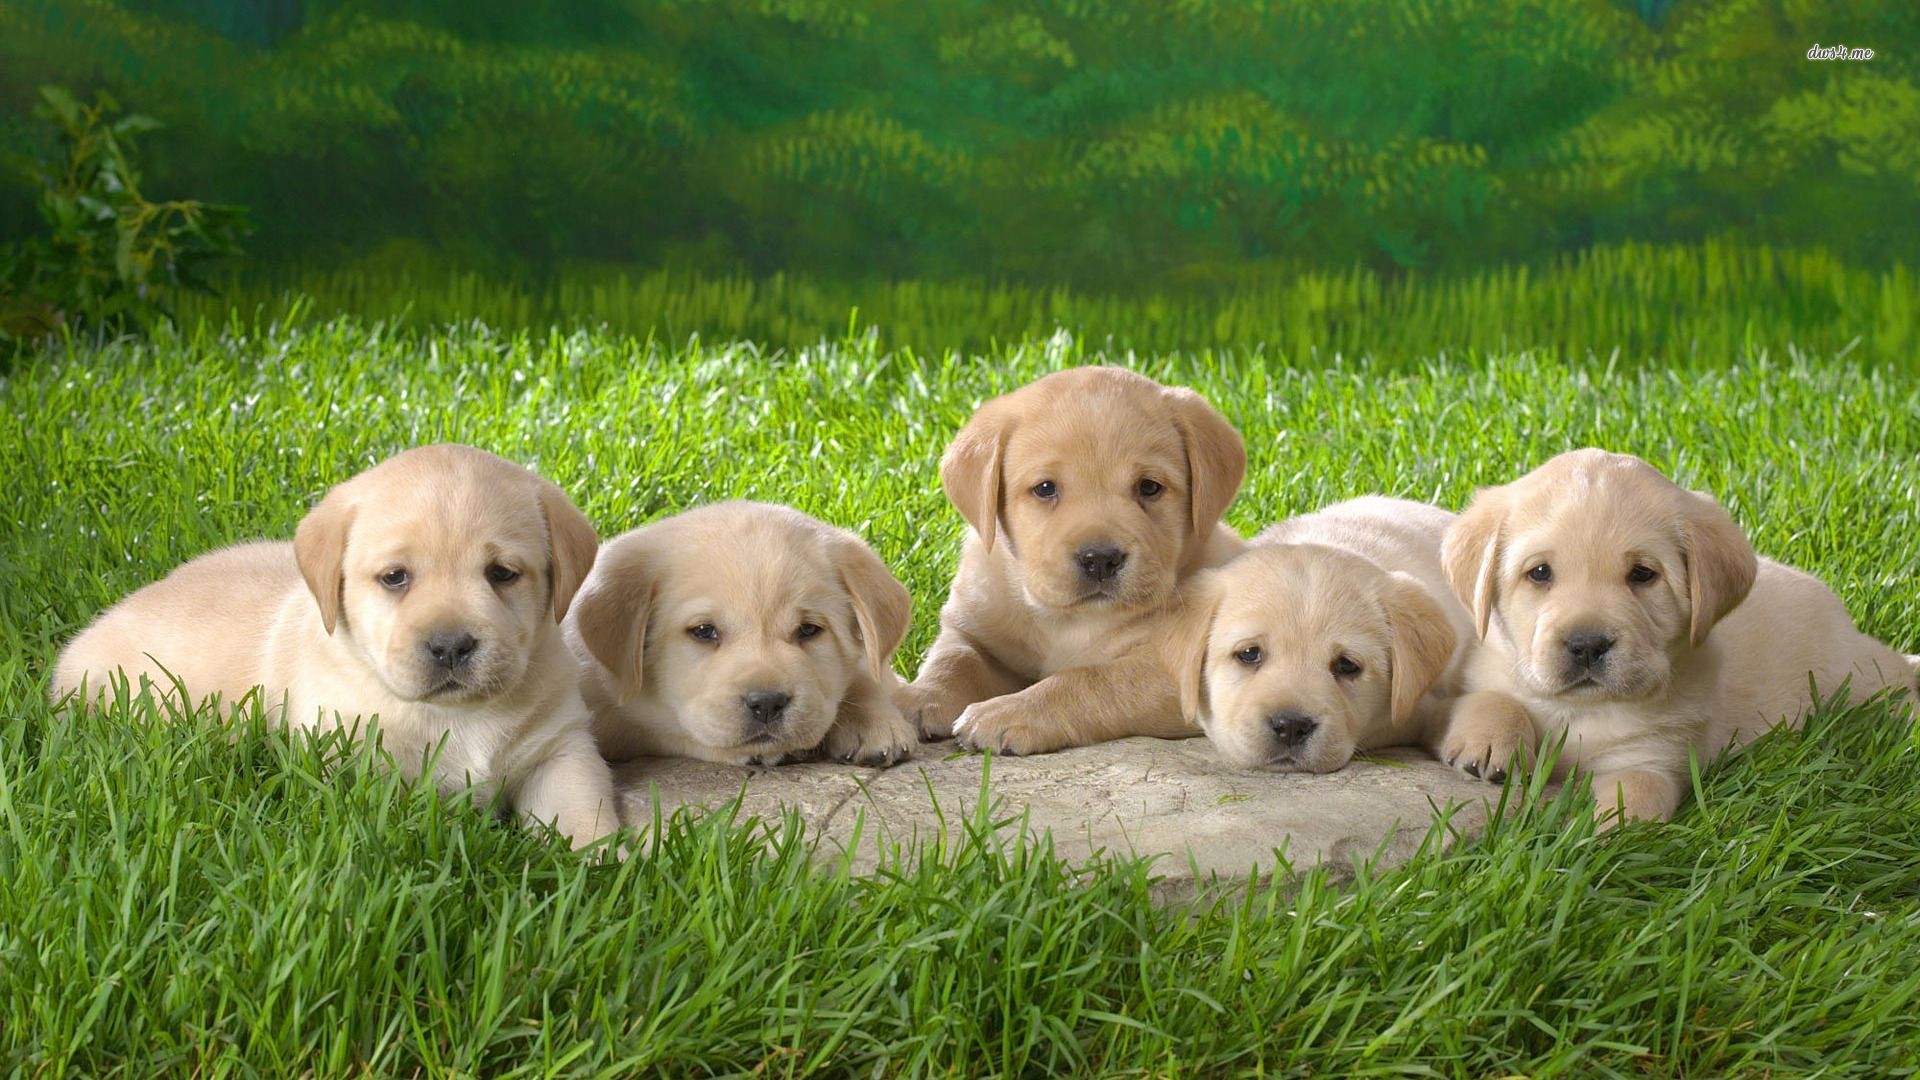 Labrador Retriever Puppies wallpaper - Animal wallpapers